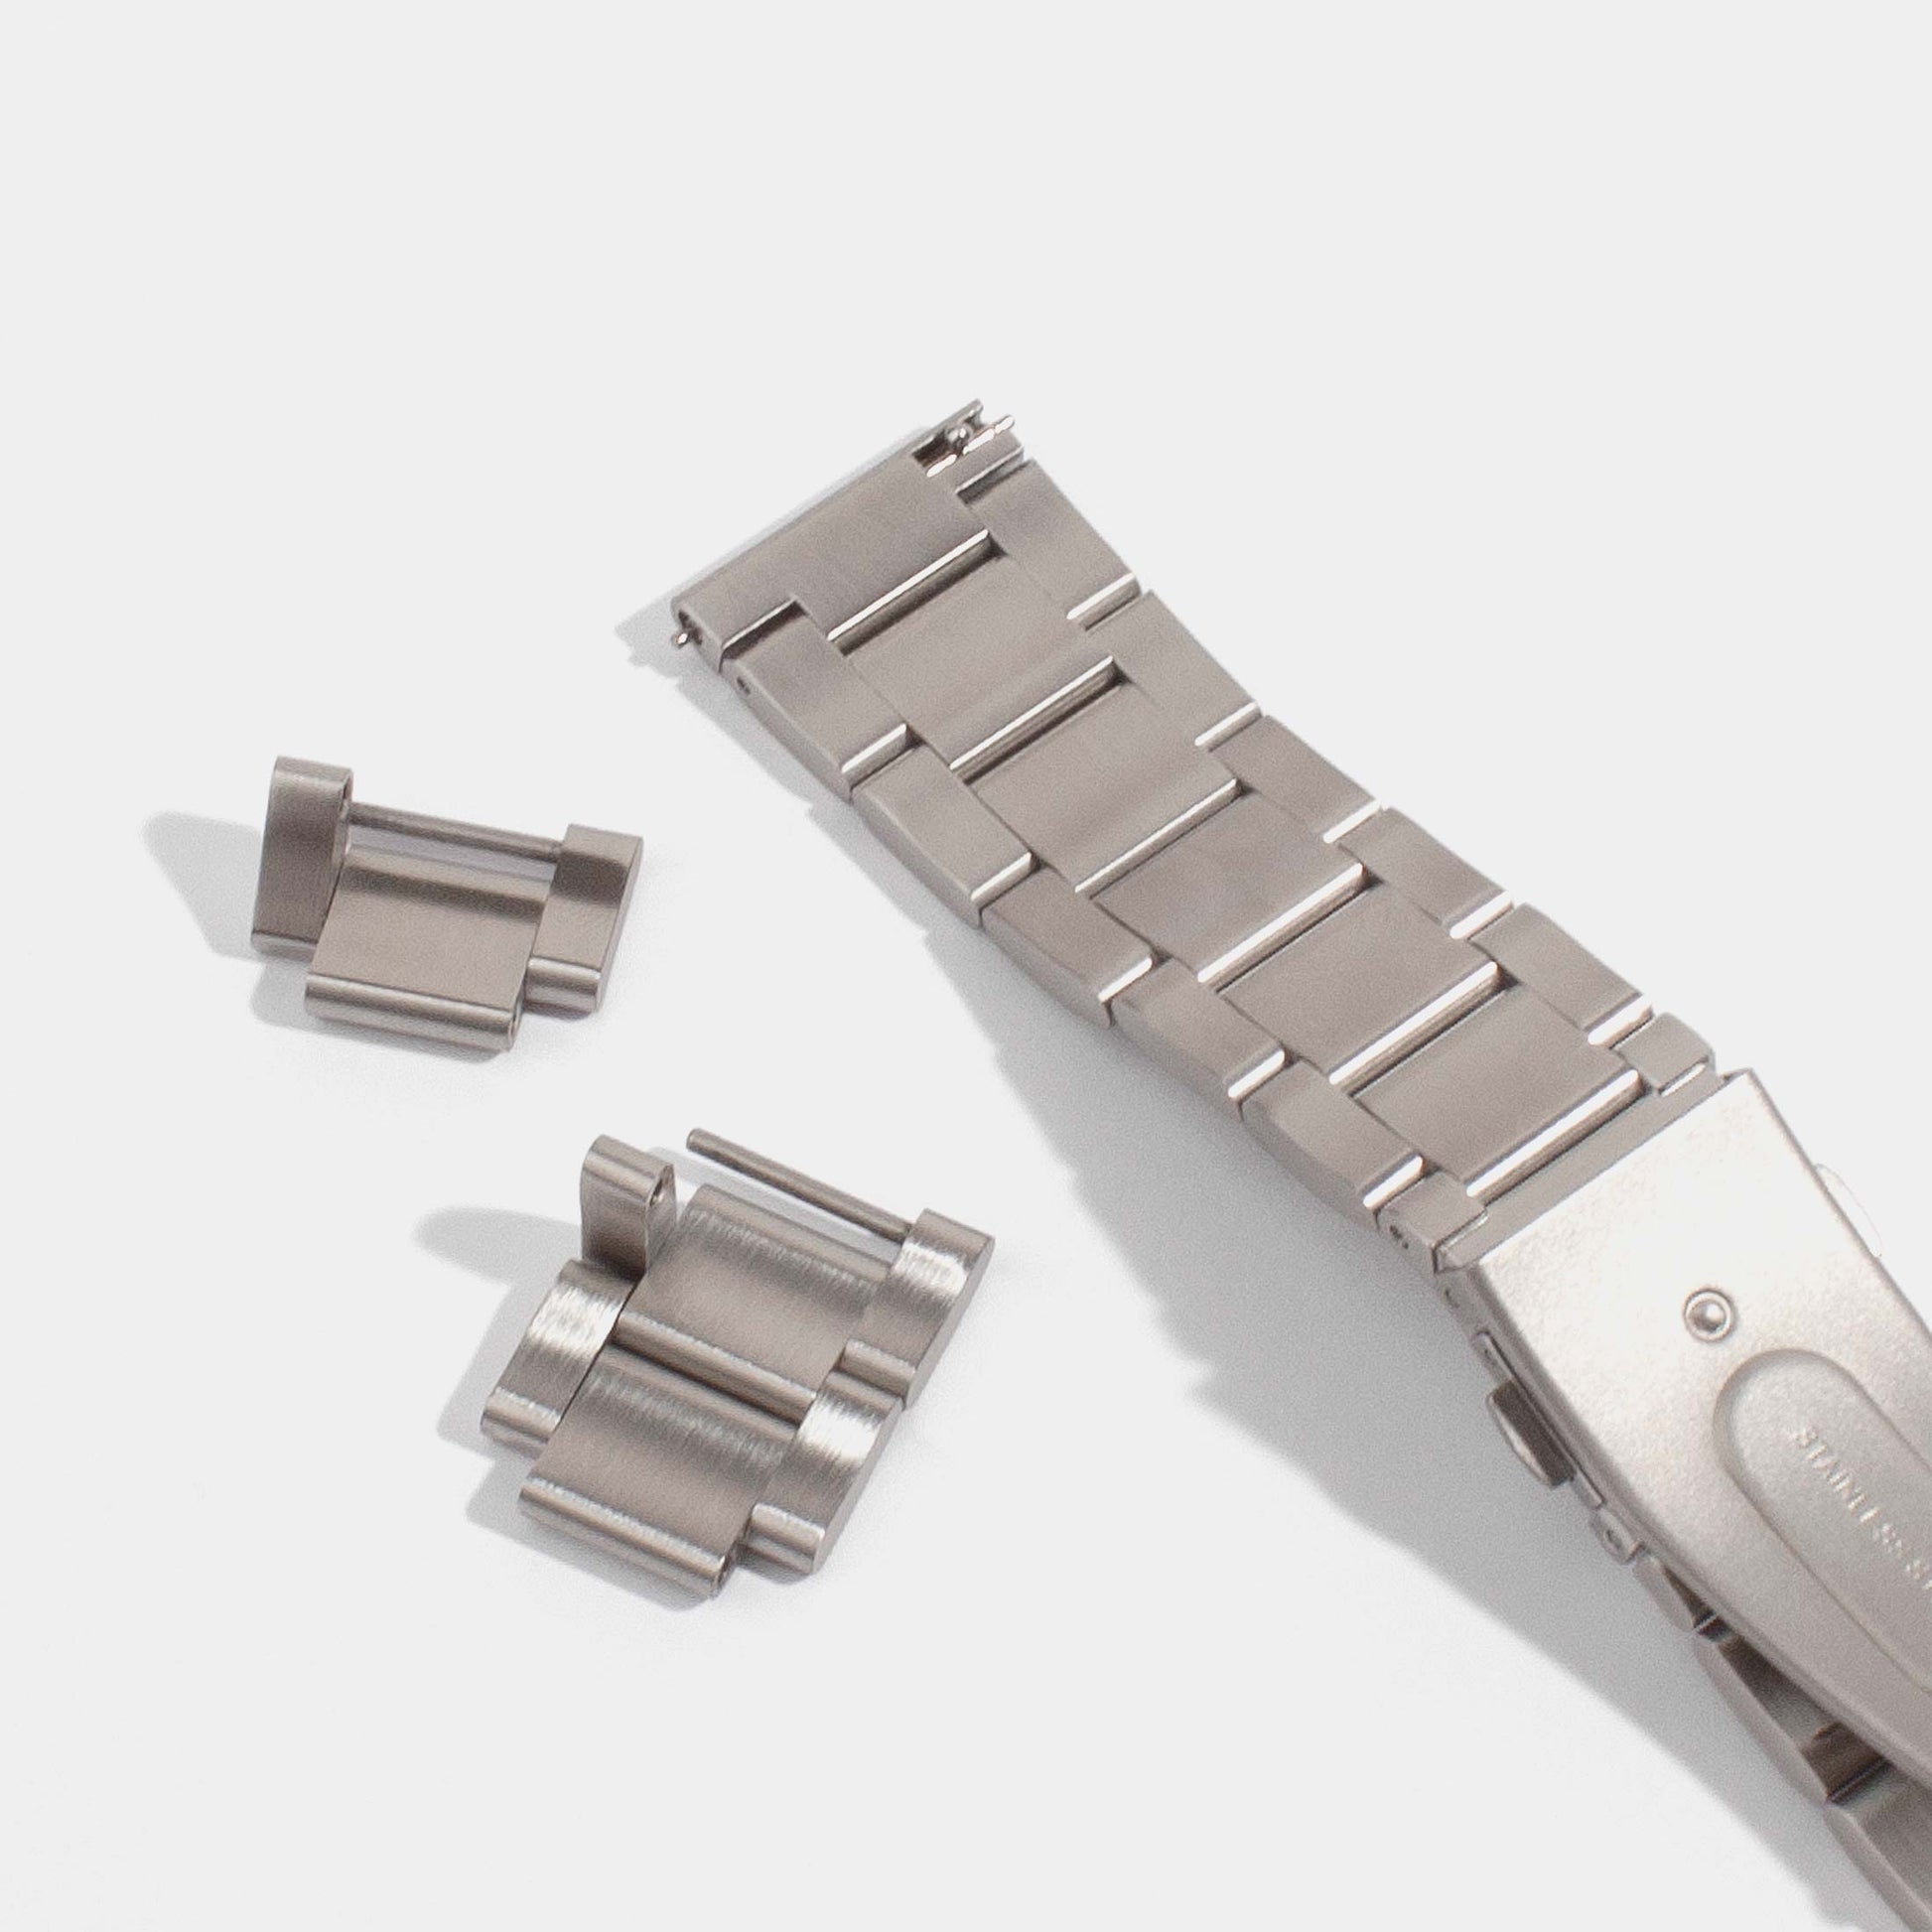 Samsung stainless steel watch strap-3-Links stainless steel watch band-Details watch clasp